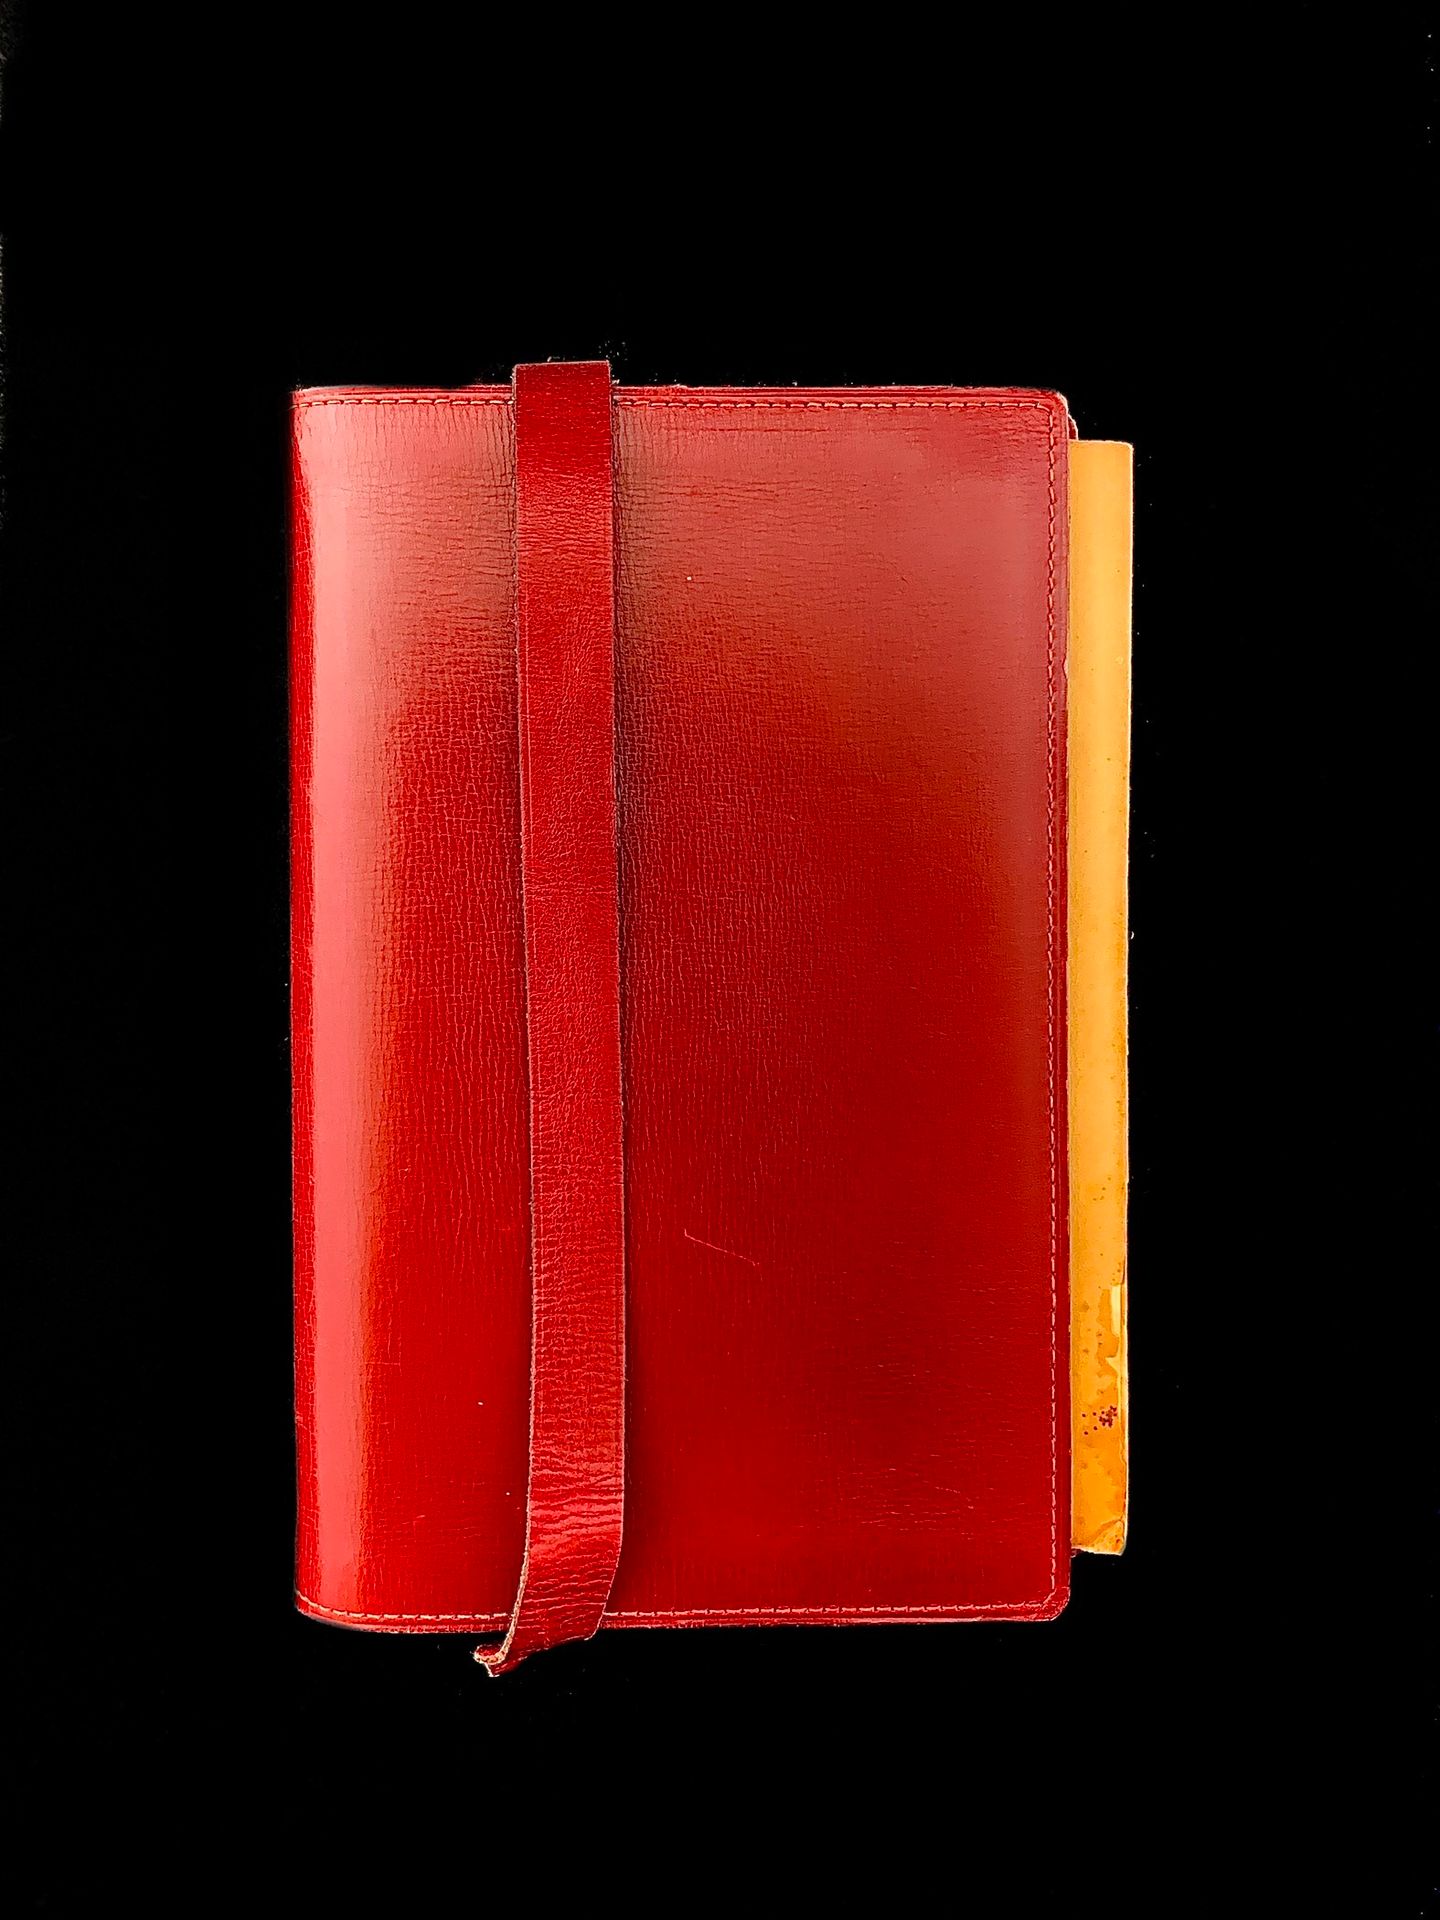 Null 莫里斯-巴雷斯，《贝勒尼斯花园》，巴黎，乔治-克雷斯等公司，1912年，平装本，酒红色皮革书皮。